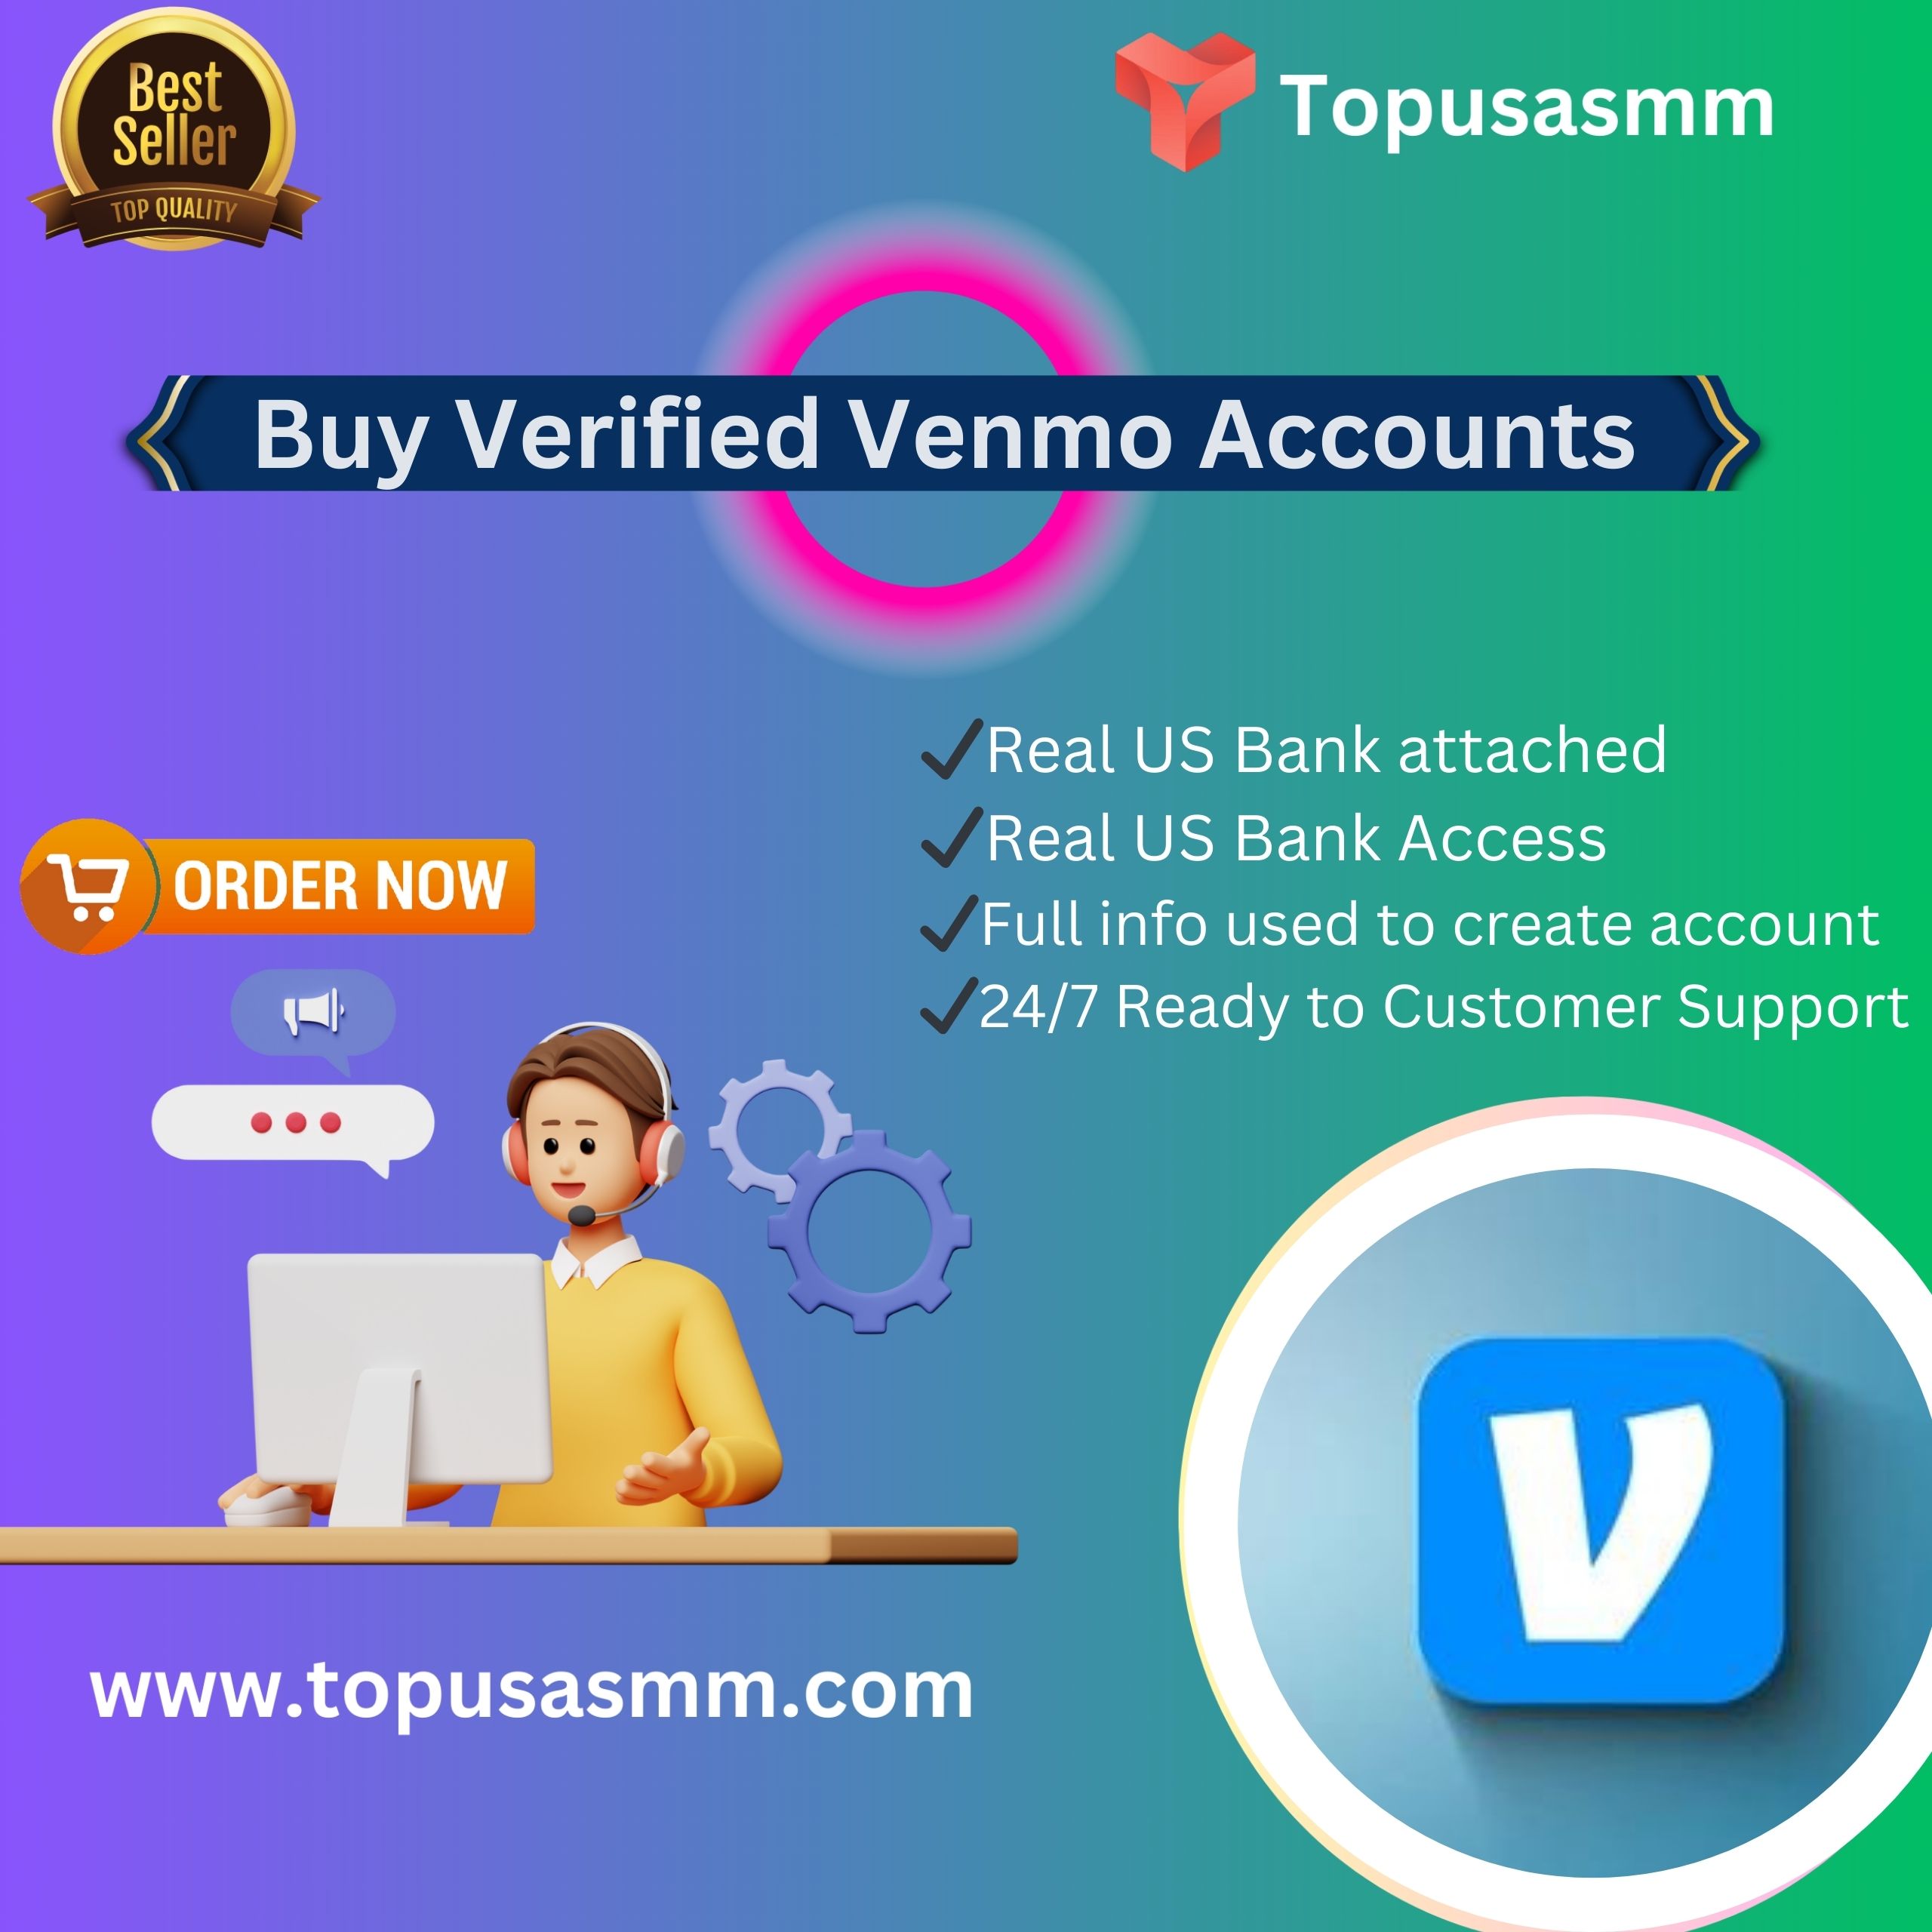 Buy Verified Venmo Accounts - Top USA Smm